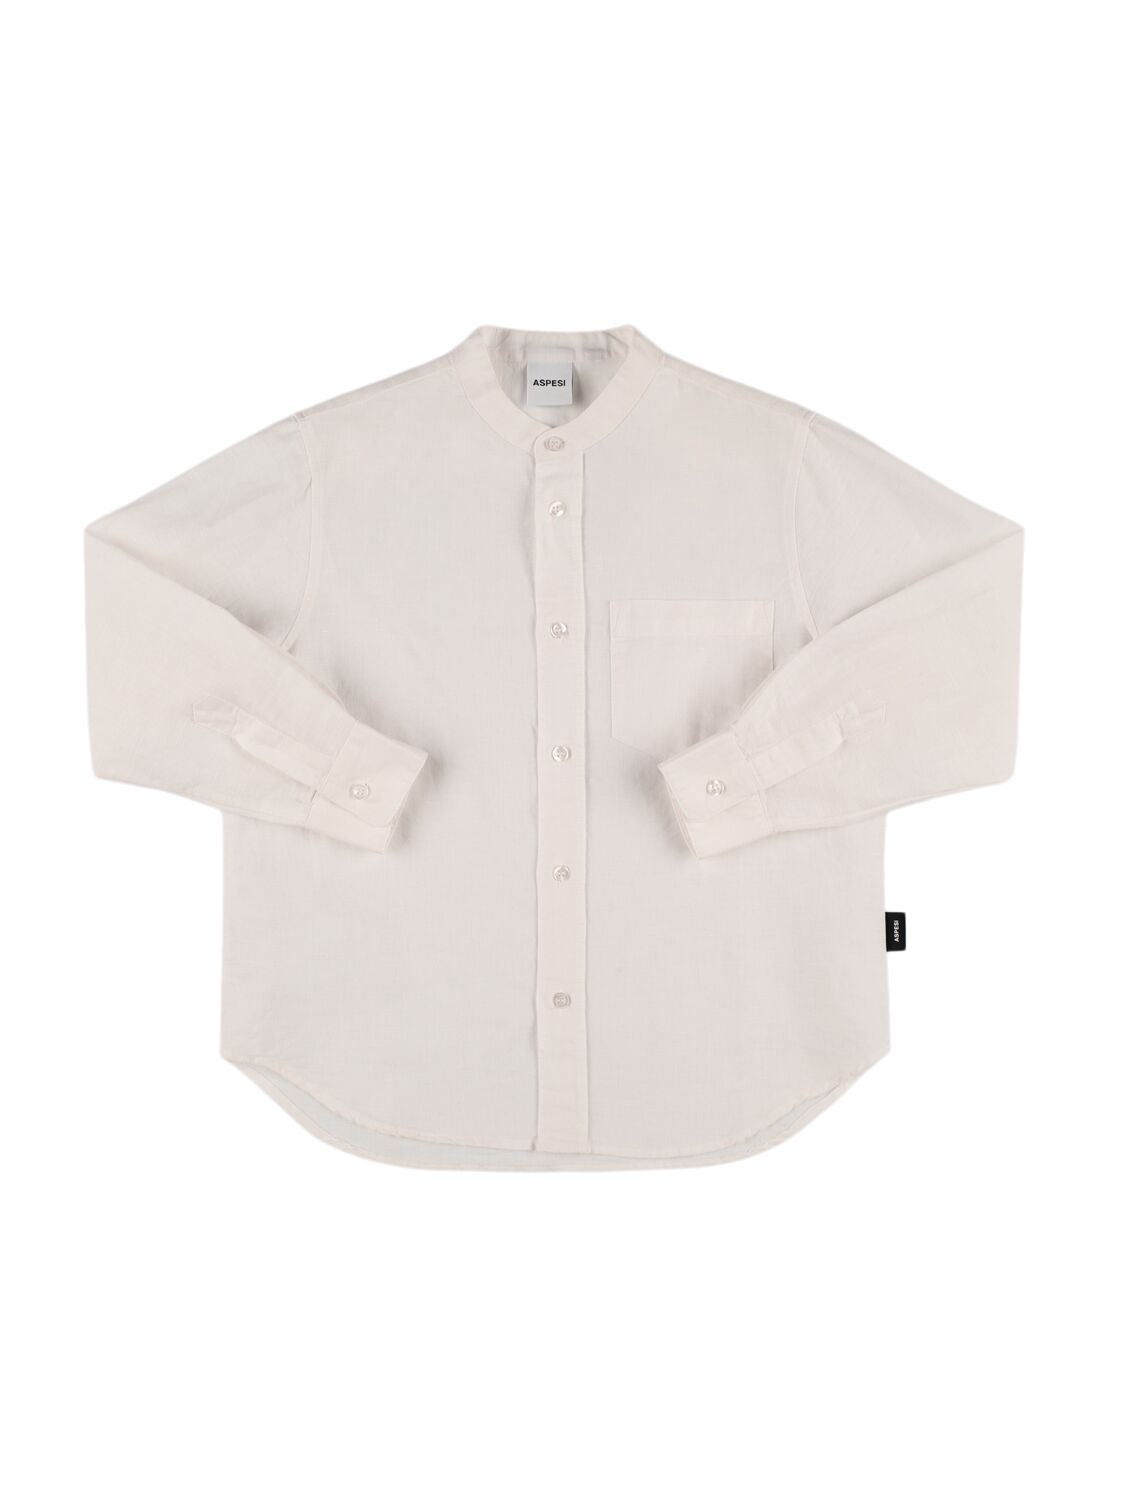 Aspesi Kids' Cotton Poplin Shirt In White